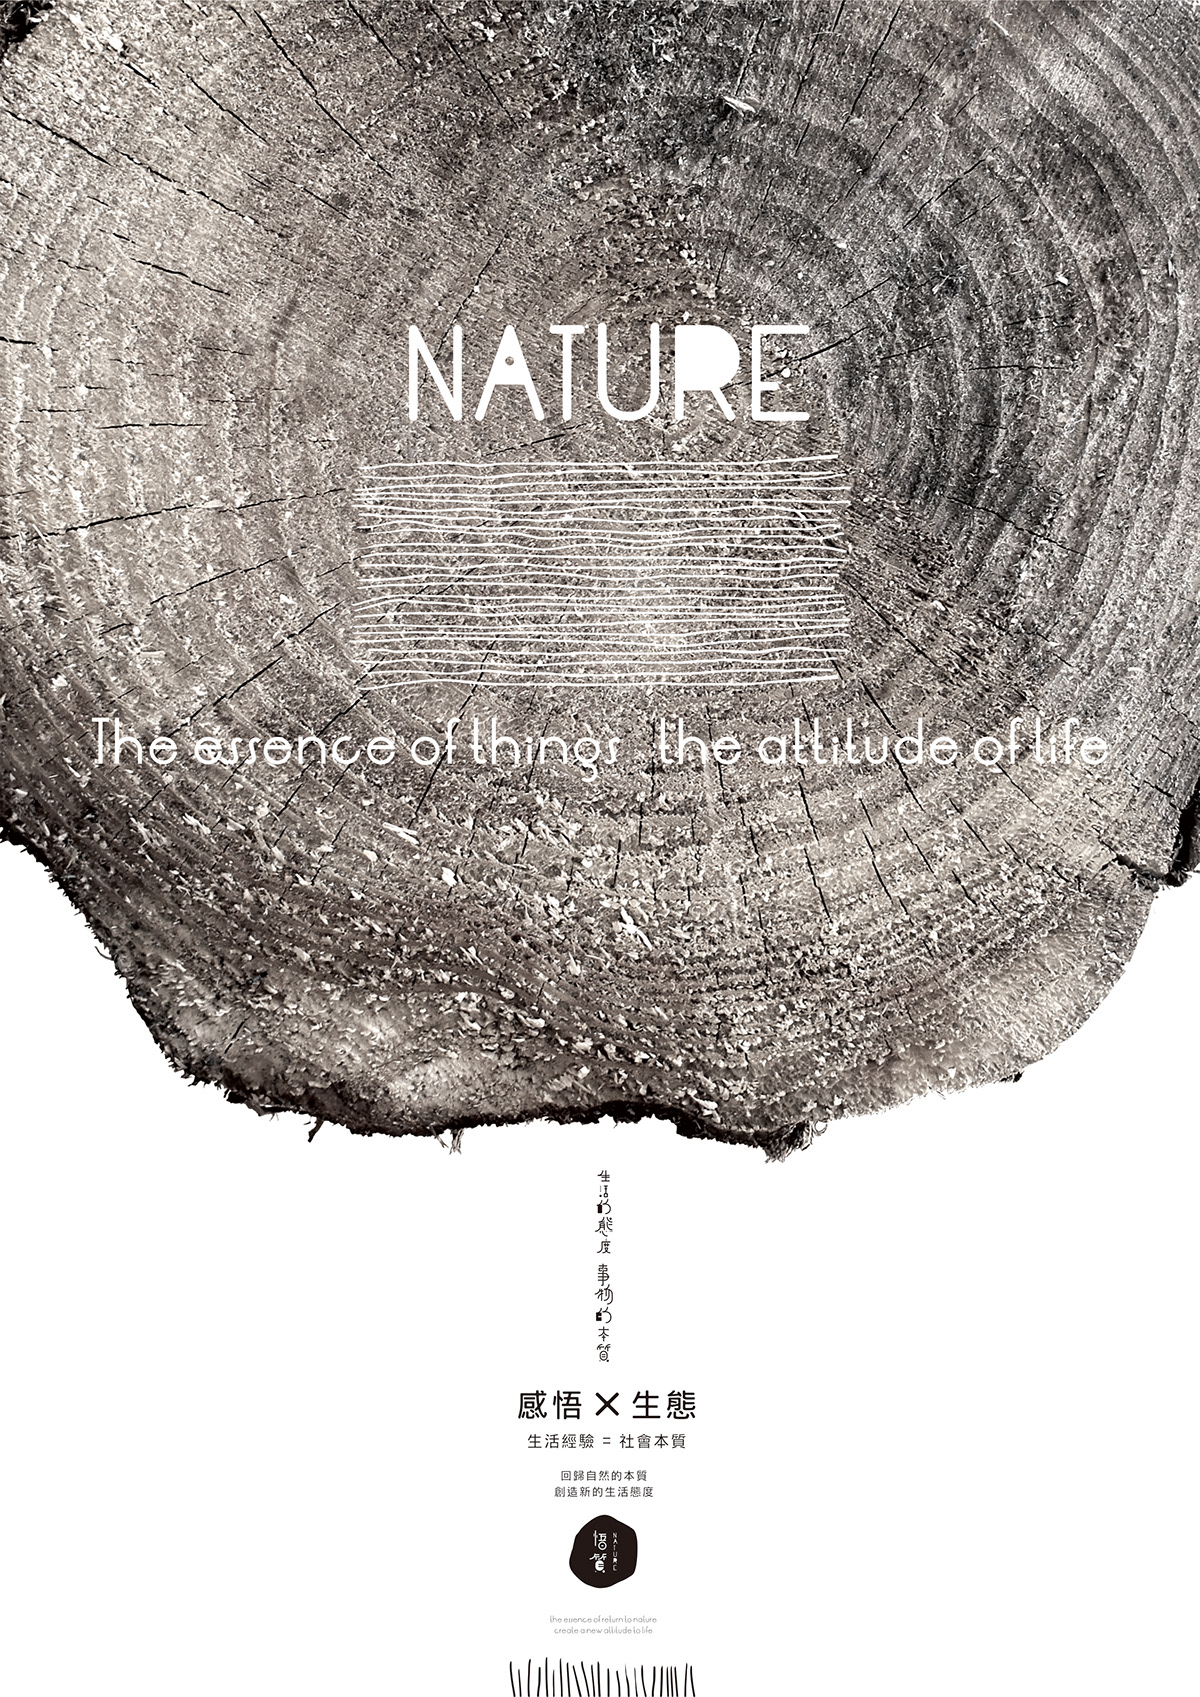 nuture wood material life garden